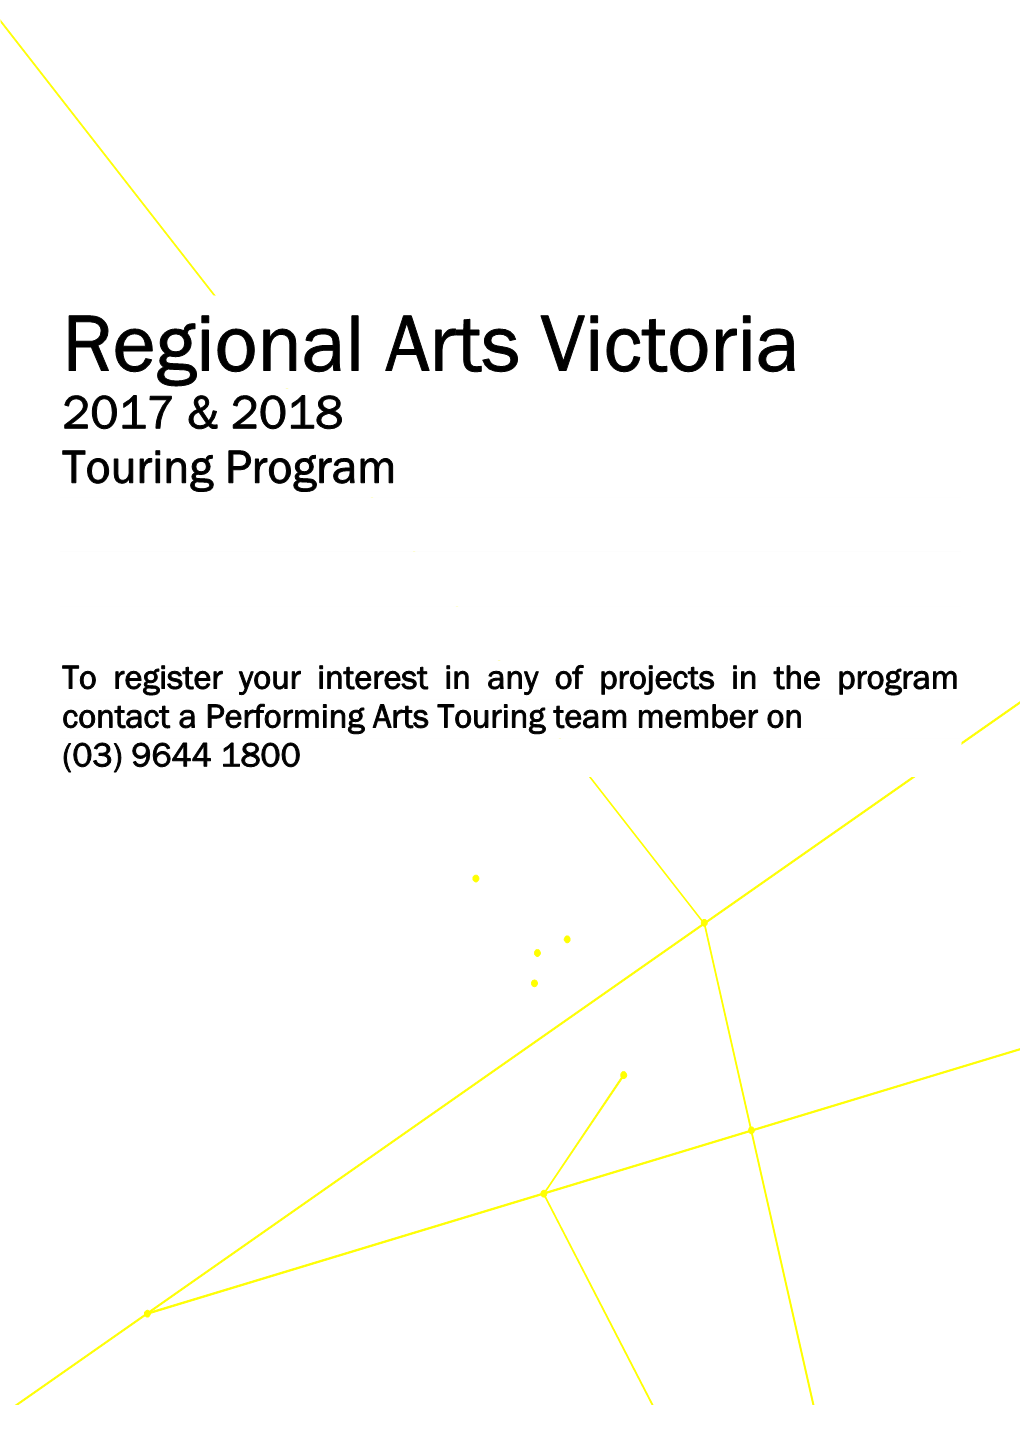 Regional Arts Victoria 2017 & 2018 Touring Program